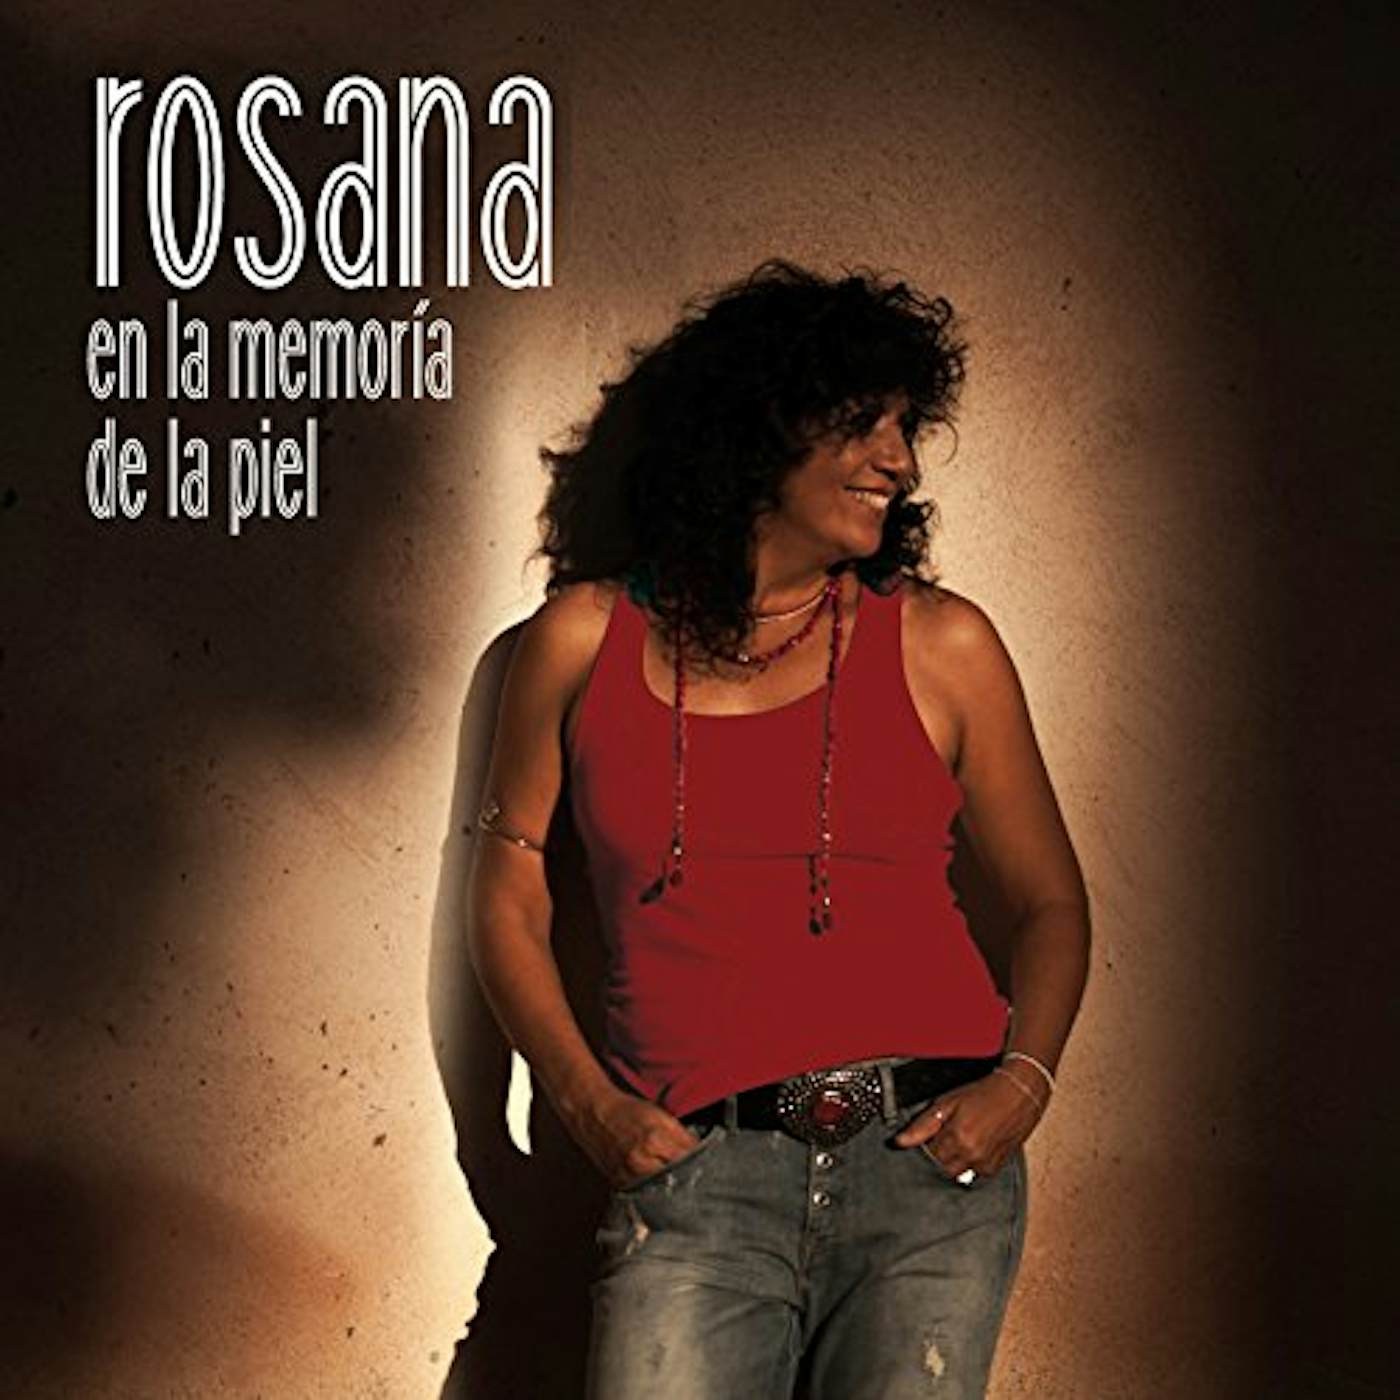 Rosana EN LA MEMORIA DE LA PIEL CD